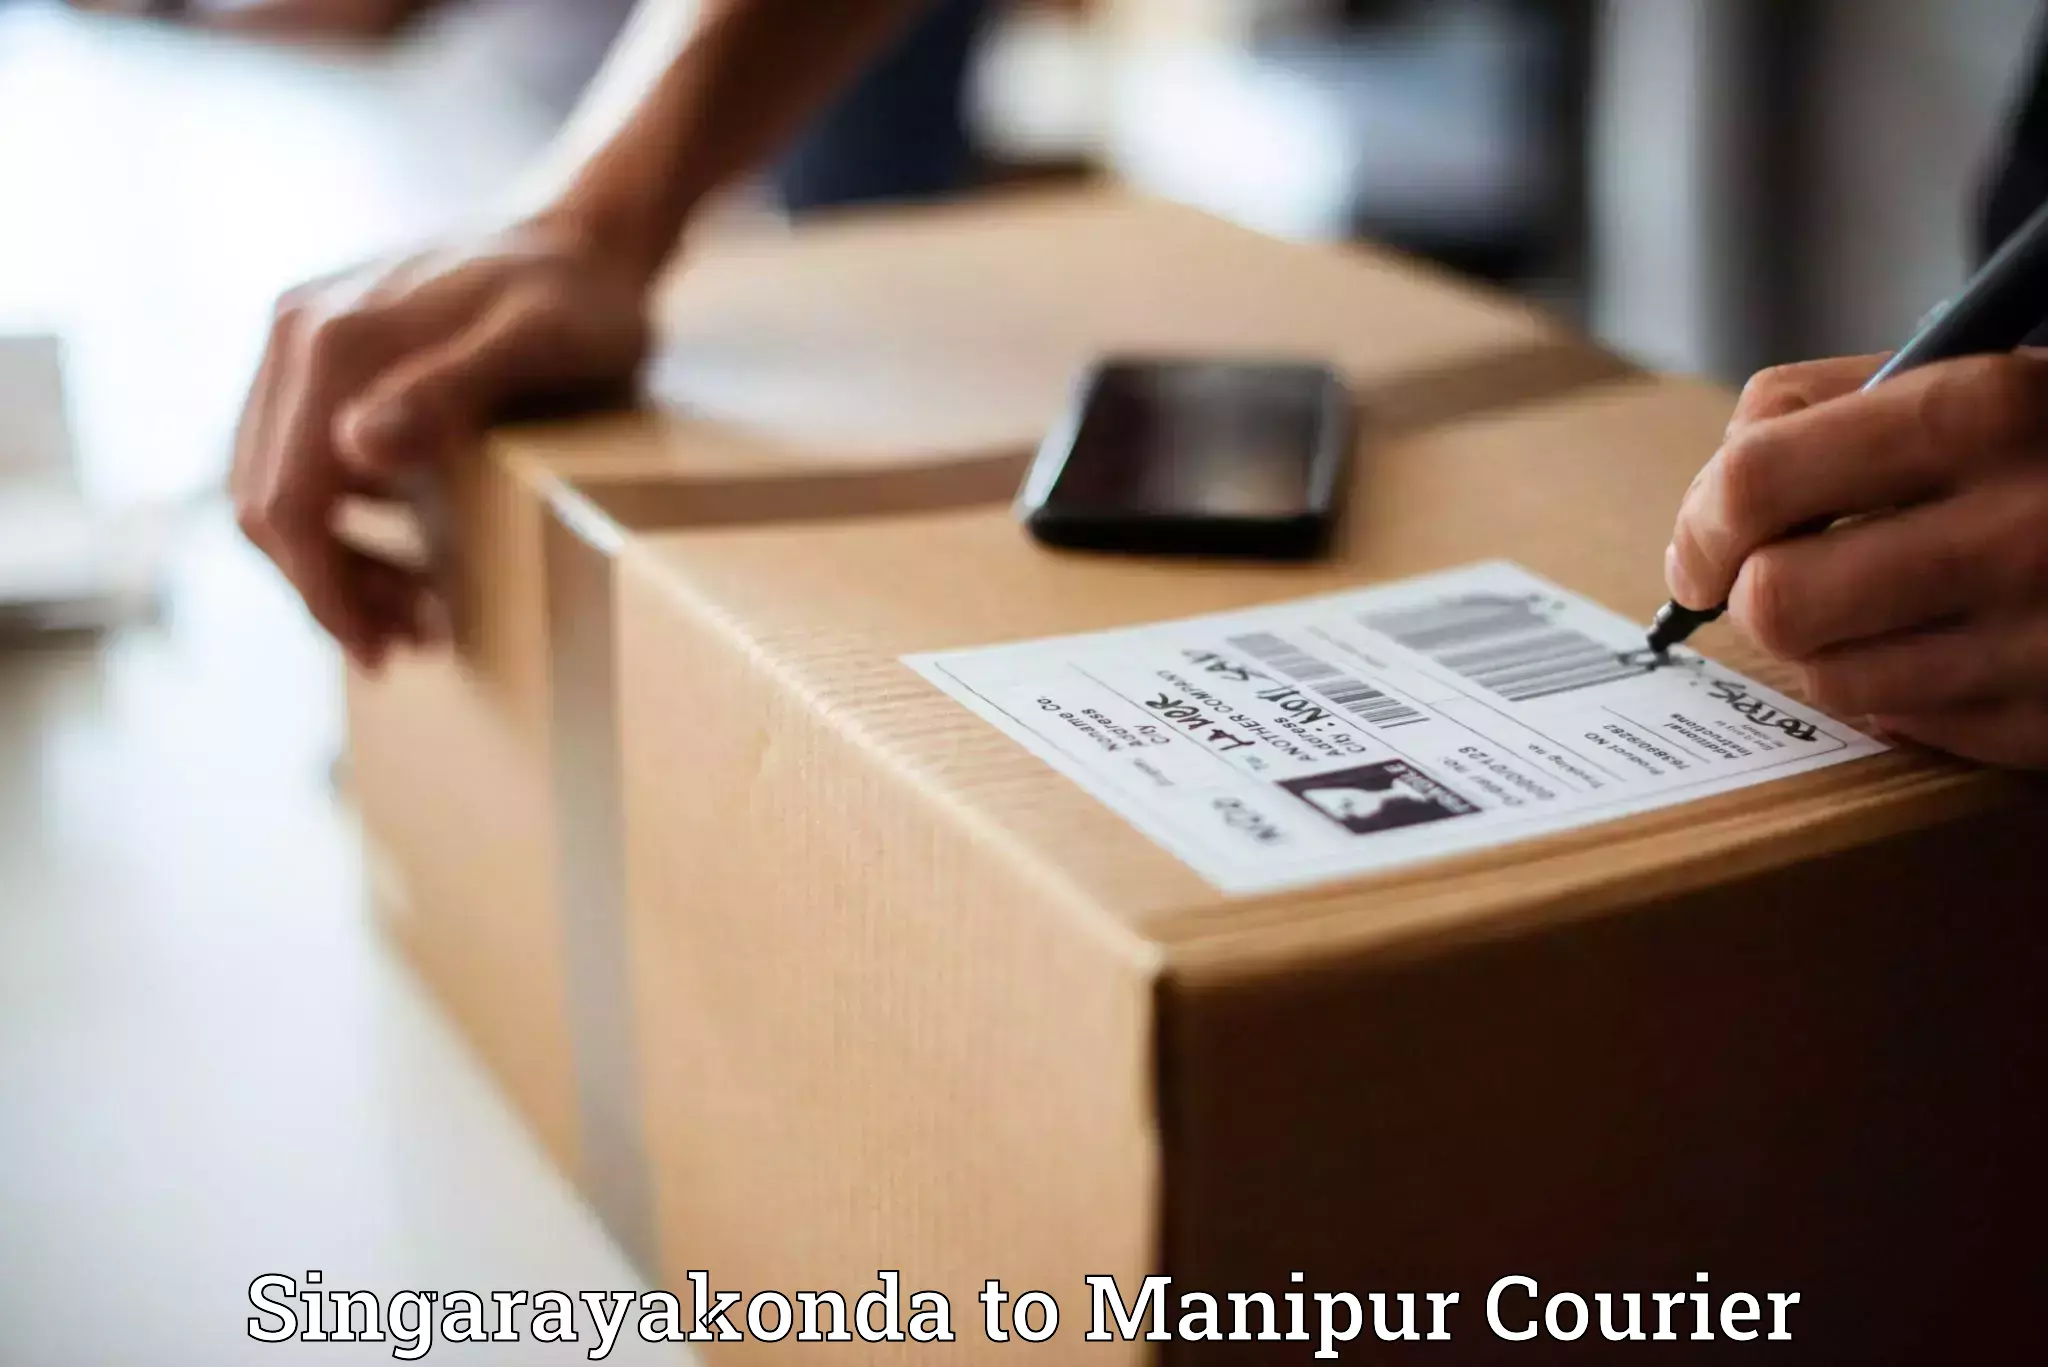 Delivery service partnership Singarayakonda to Manipur